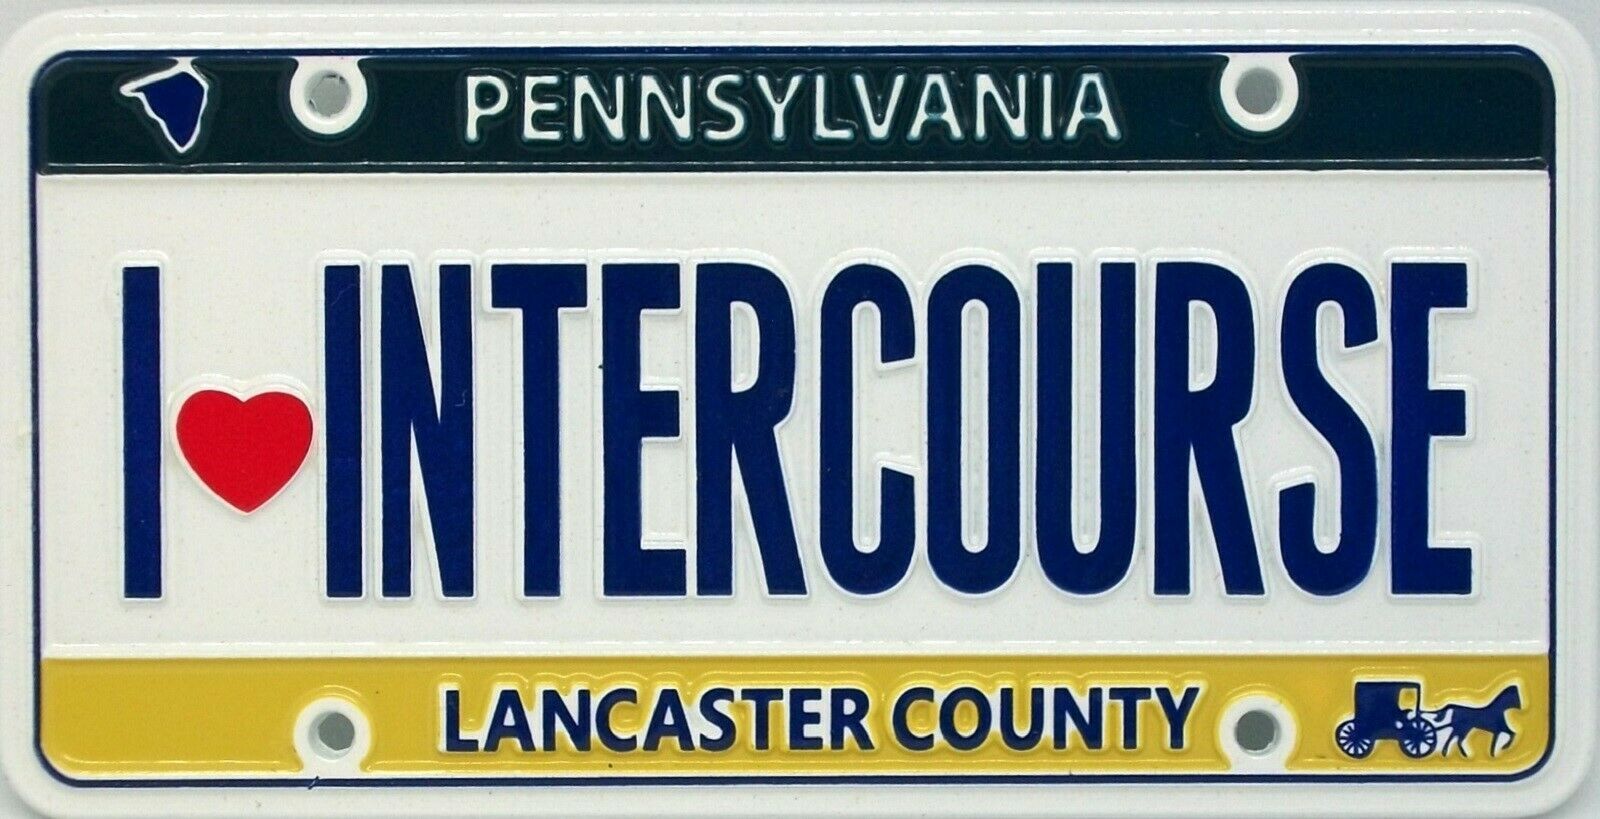 I Love Intercourse Lancaster County Pennsylvania License Plate Souvenir Fridge - $7.99